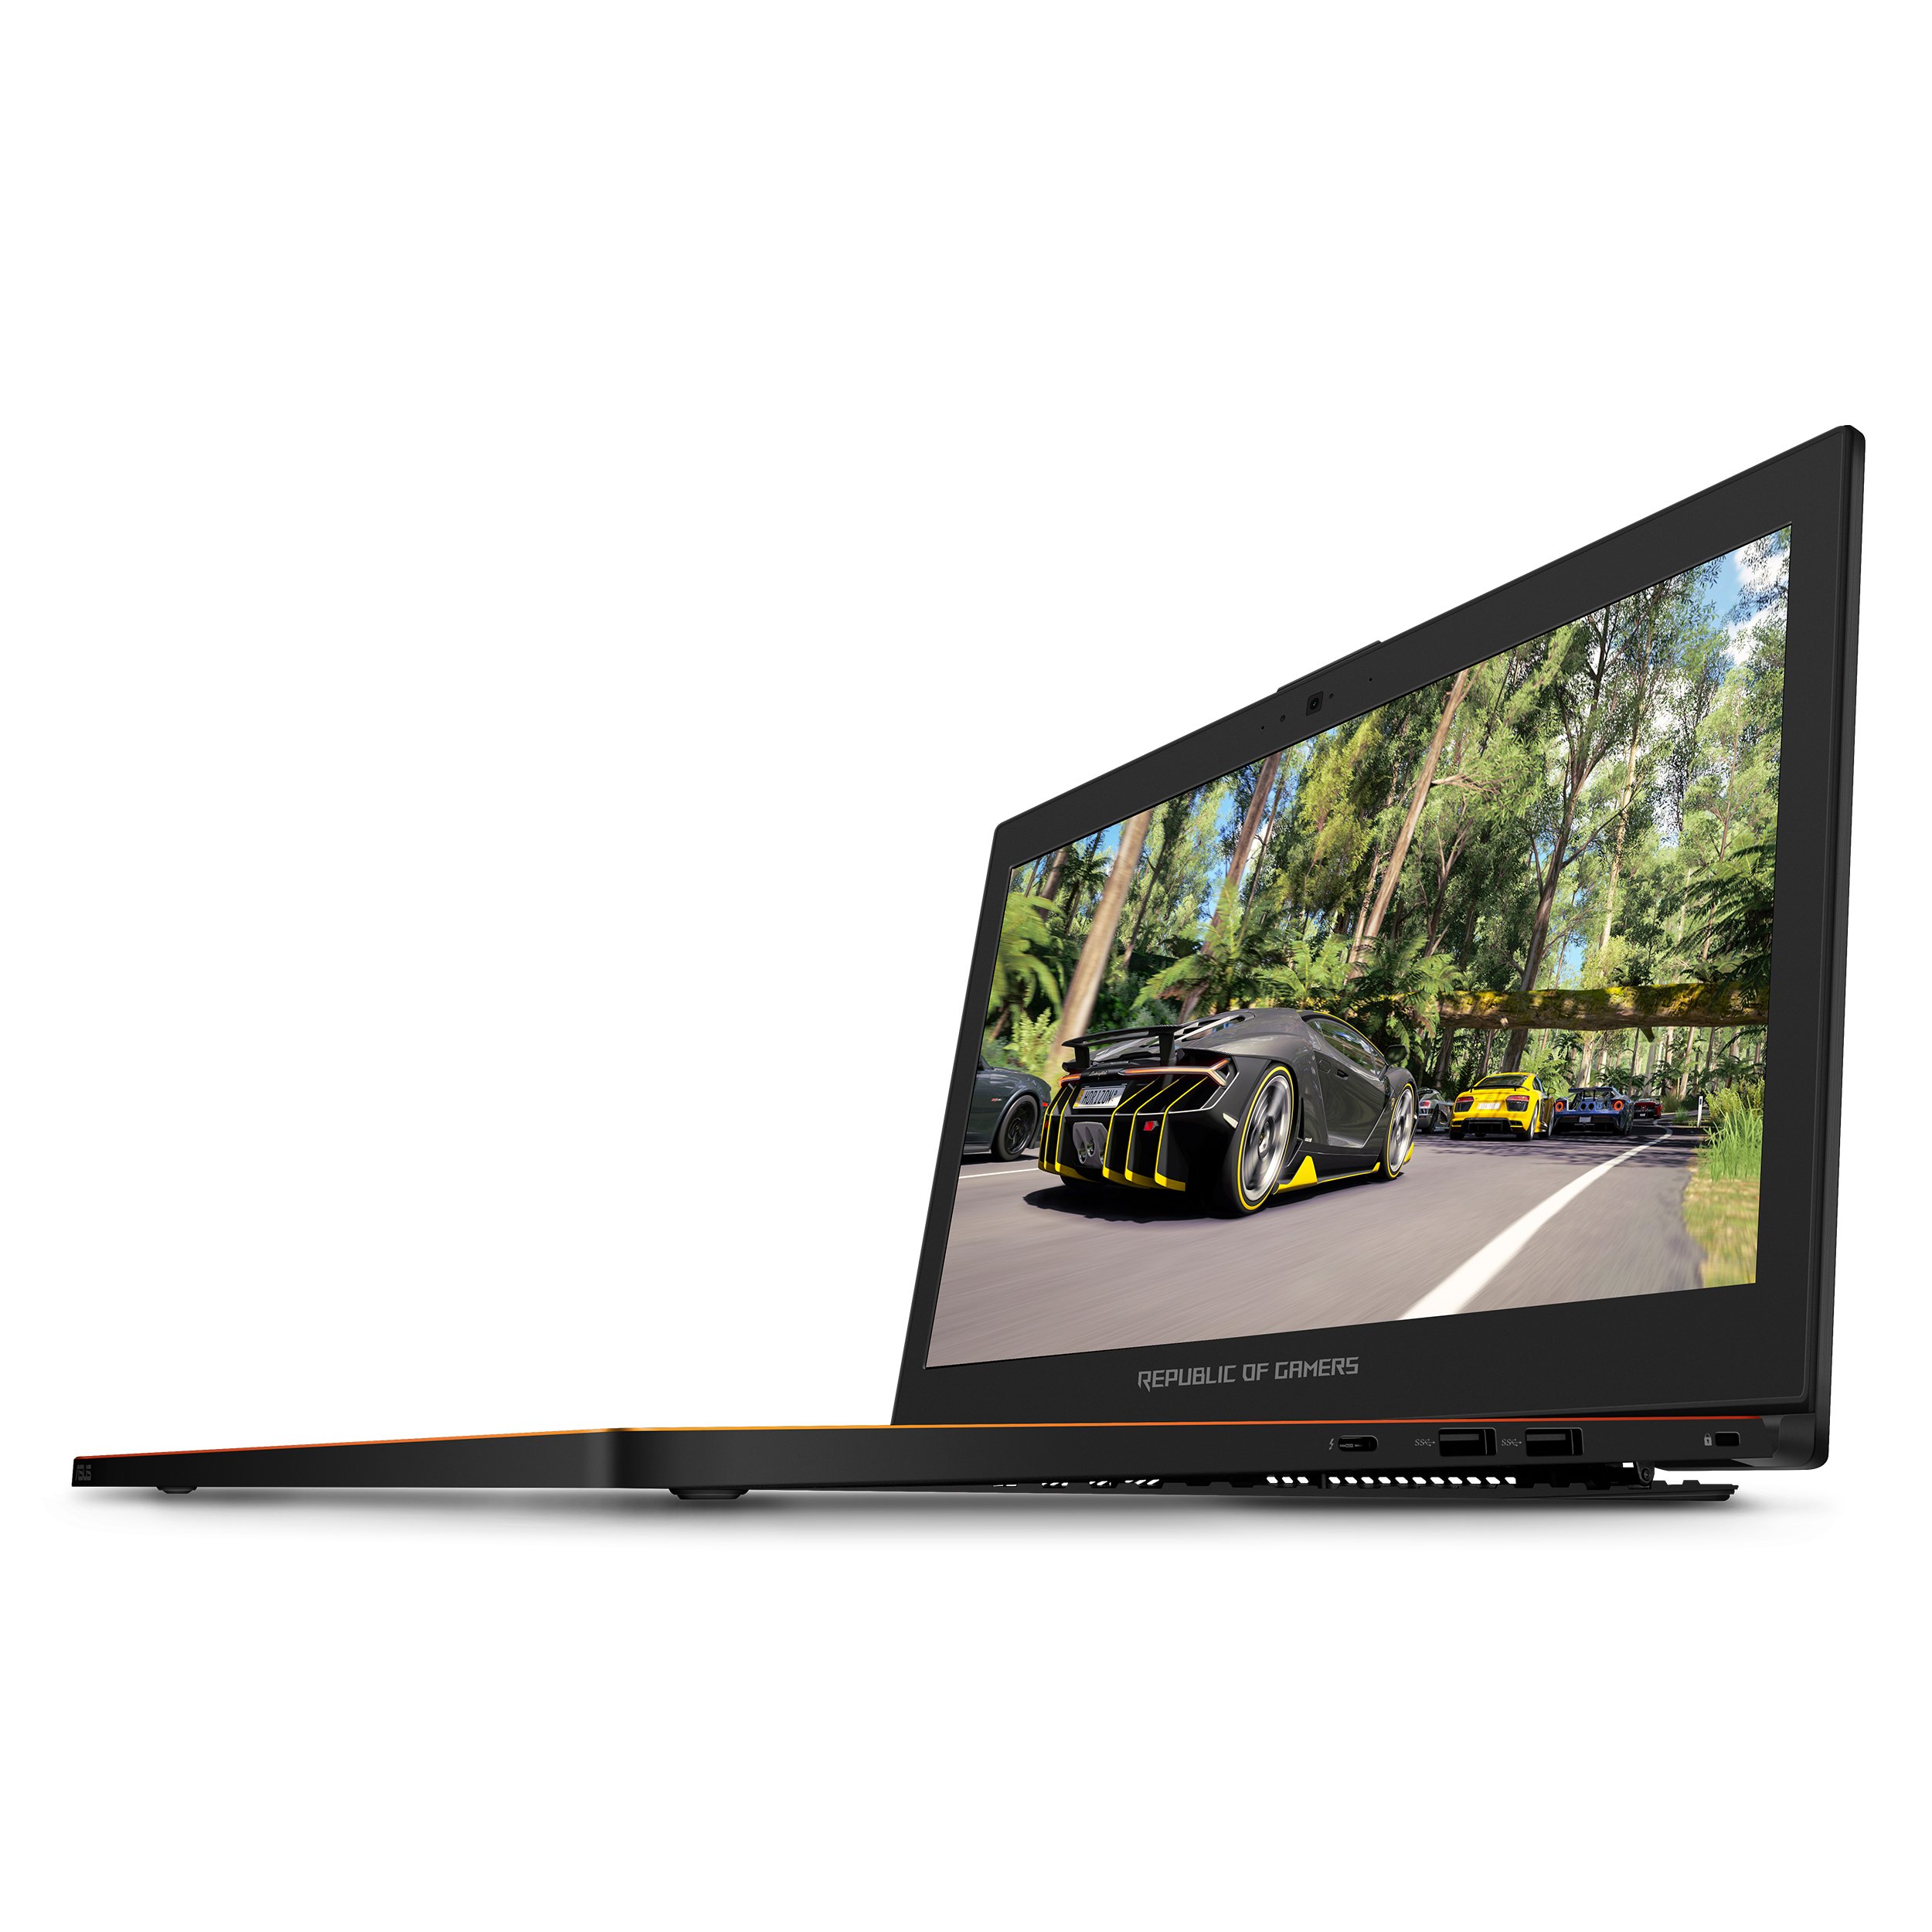 ASUS ROG Zephyrus Thin & Light Gaming Laptop, 15.6” Full HD 120Hz, Intel Core i7-7700HQ Processor, NVIDIA GeForce GTX 1080 8GB Max Q, 16GB DDR4, 512GB PCIe SSD, Windows 10 Professional – GX501VI-XS74